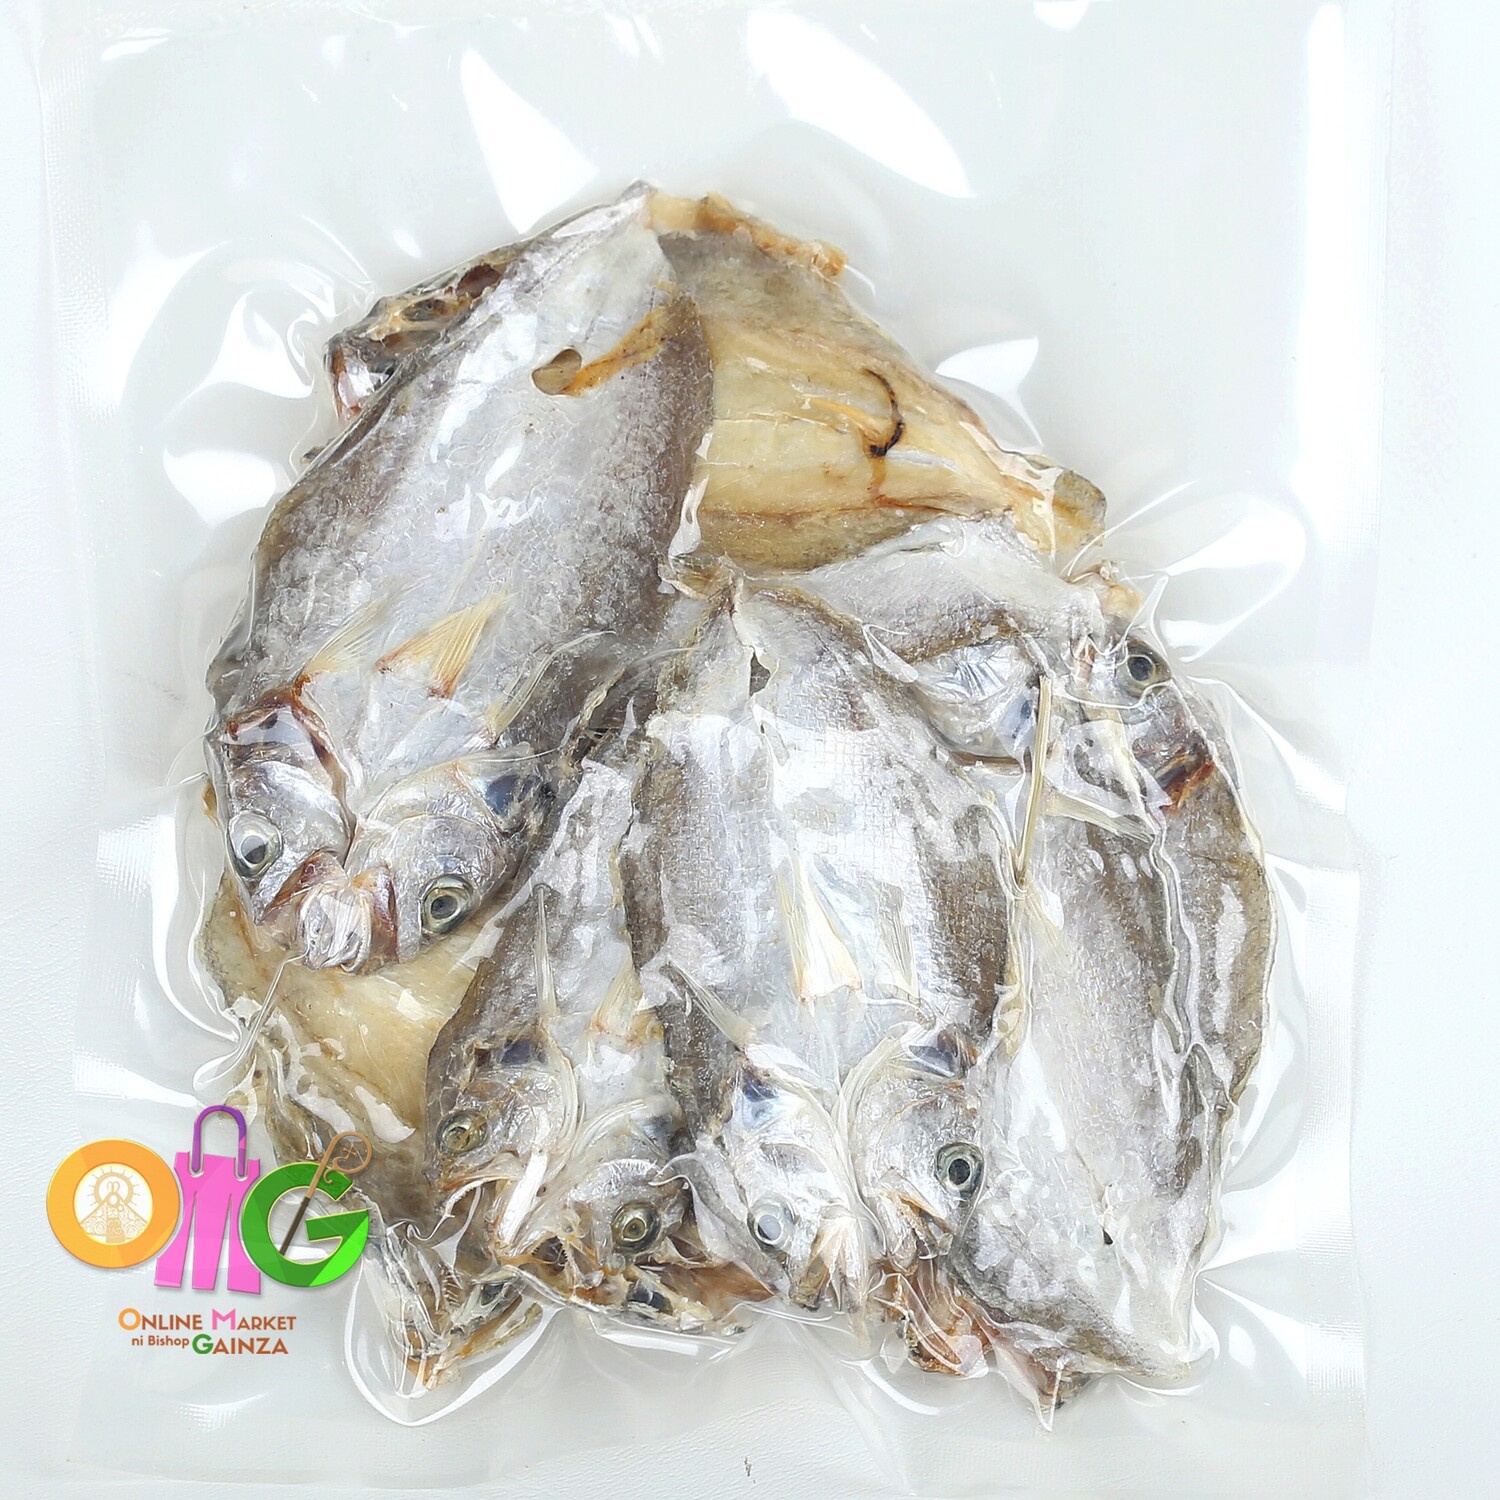 DYH Fish Products - Boneless Abo